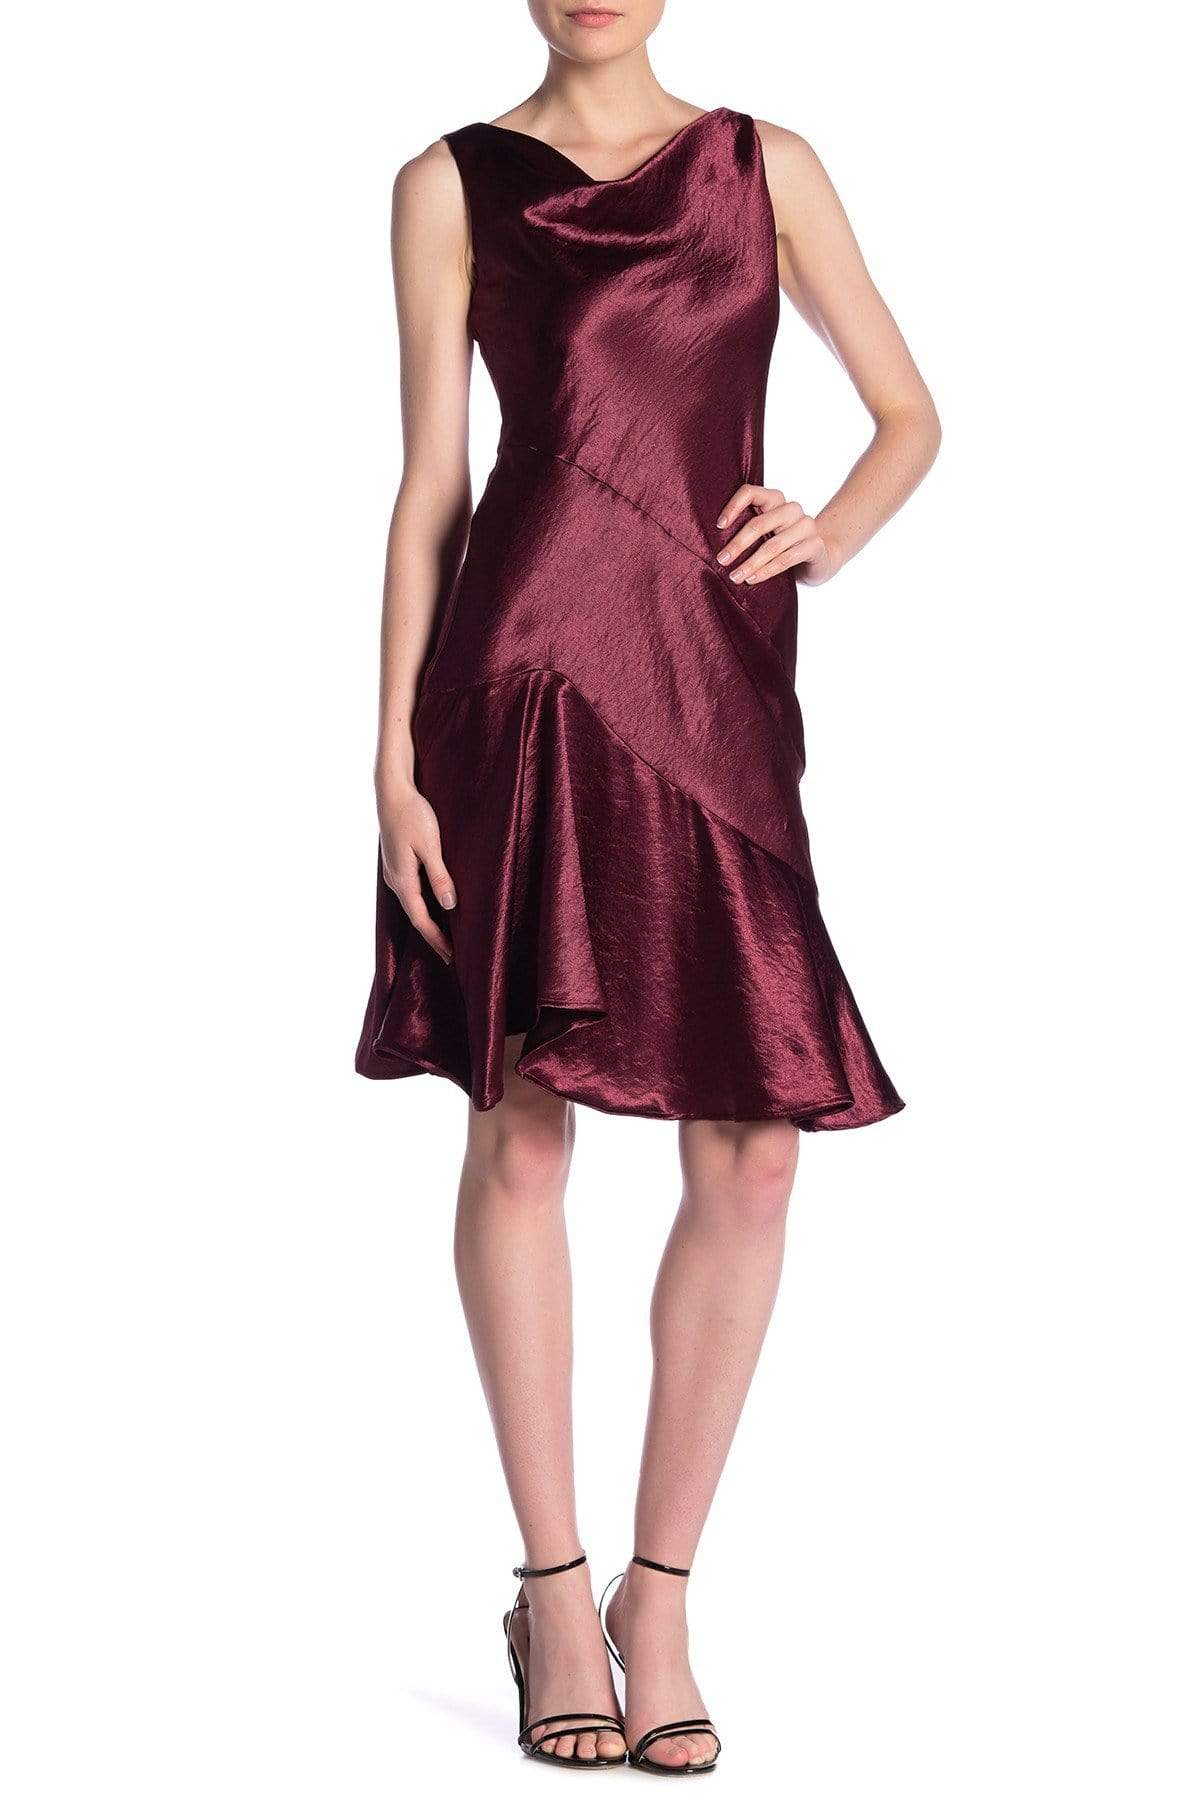 Taylor - 9973M Cowl Neck Satin Asymmetrical Hemmed Dress
